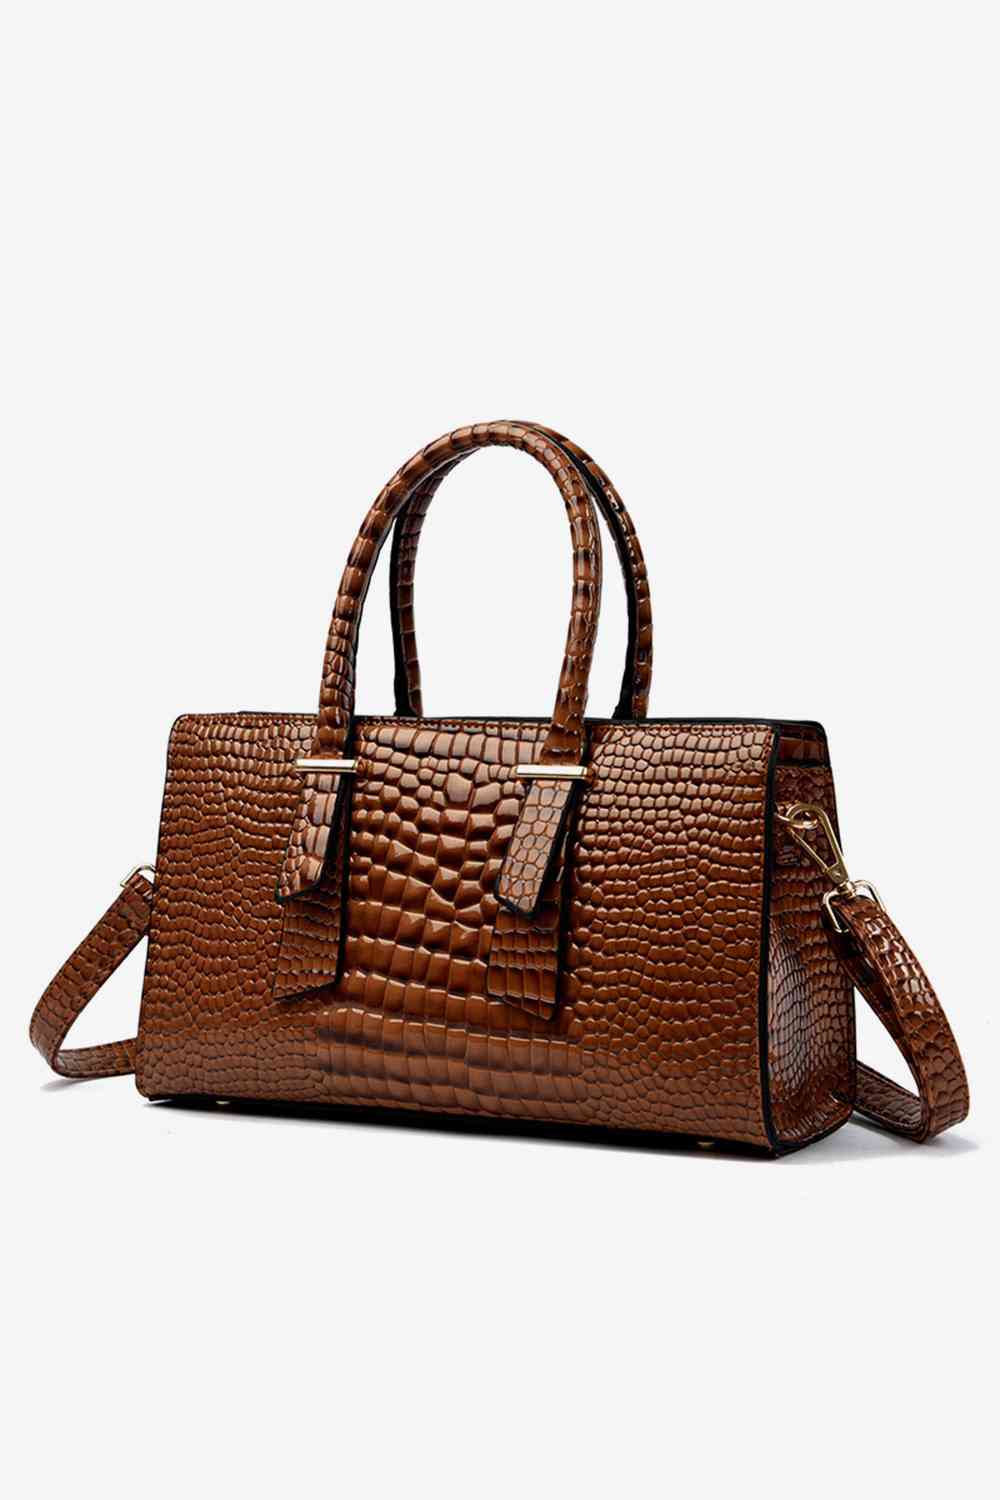 Textured PU Leather Handbag - Just Enuff Sexy